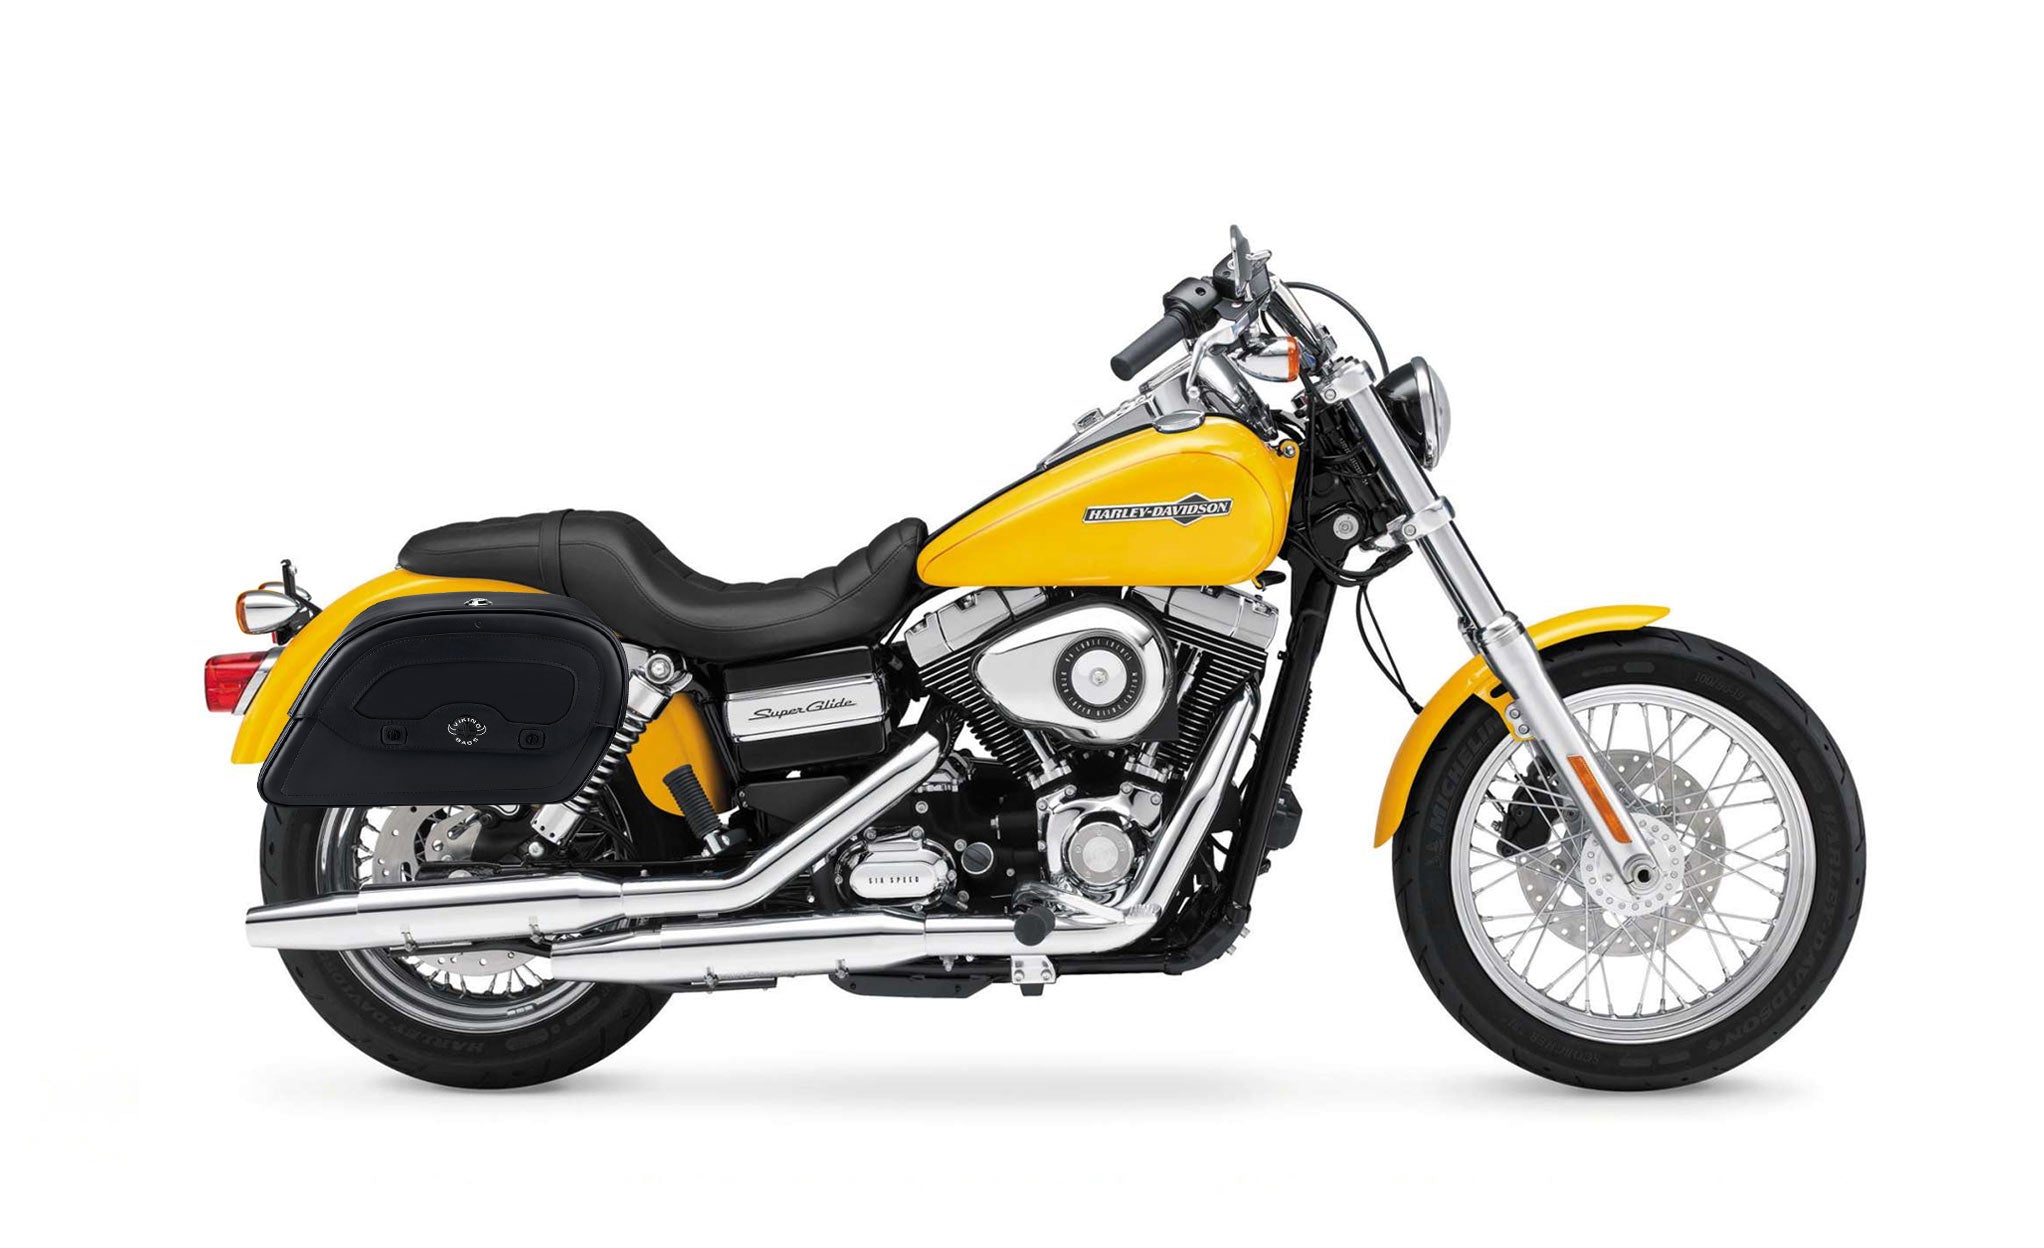 Viking Warrior Medium Leather Motorcycle Saddlebags For Harley Dyna Super Glide Fxd I on Bike Photo @expand